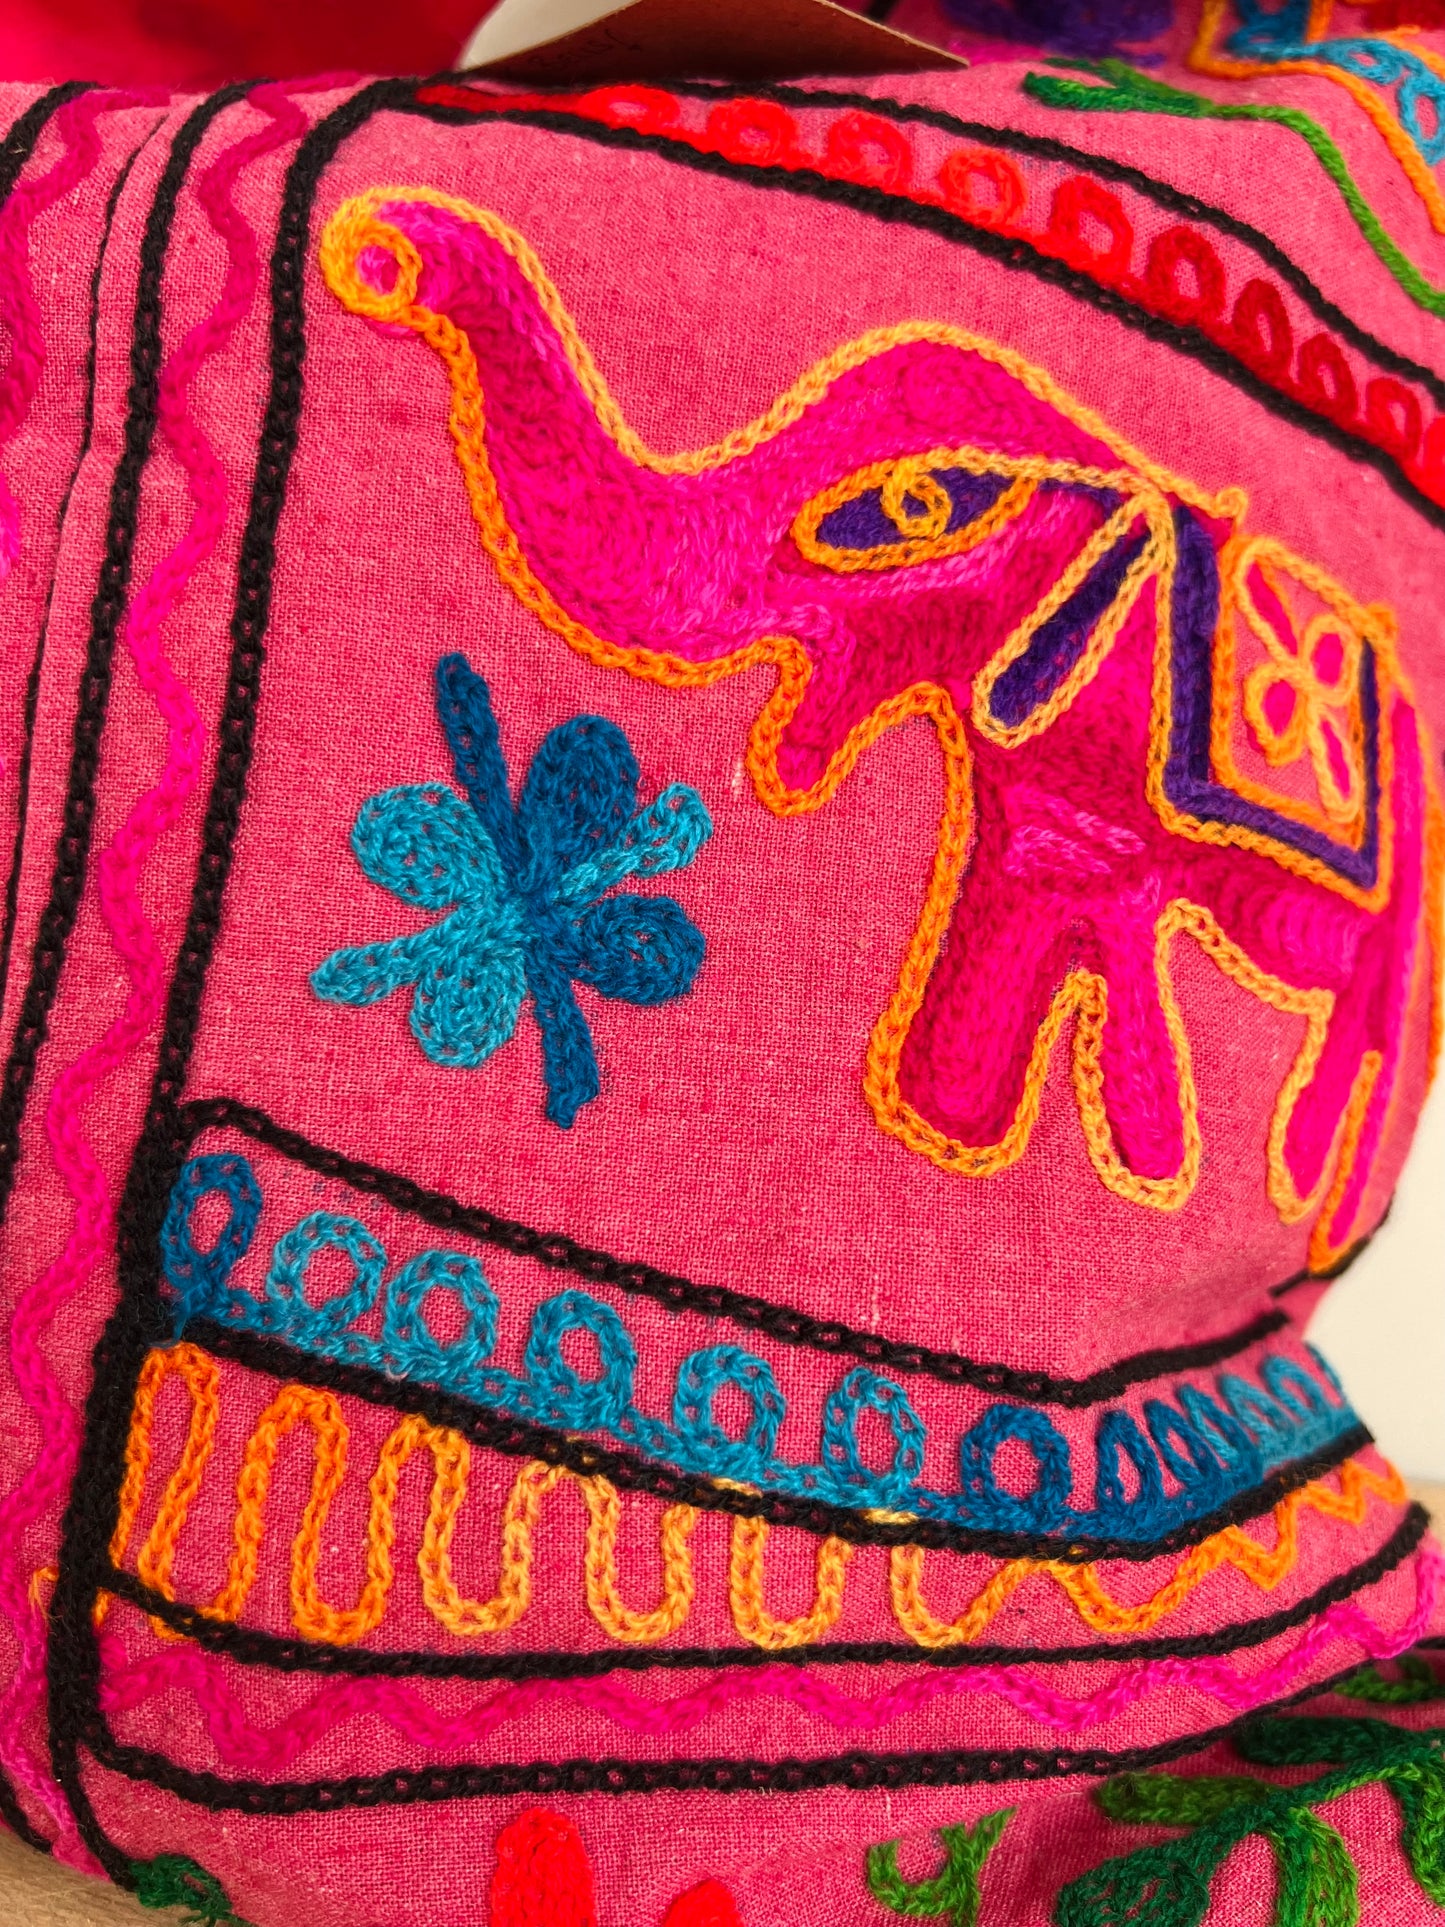 Handmade Fair Trade Elephant Embroidered Shoulder Bag Hippie Bohemian Bag Pink